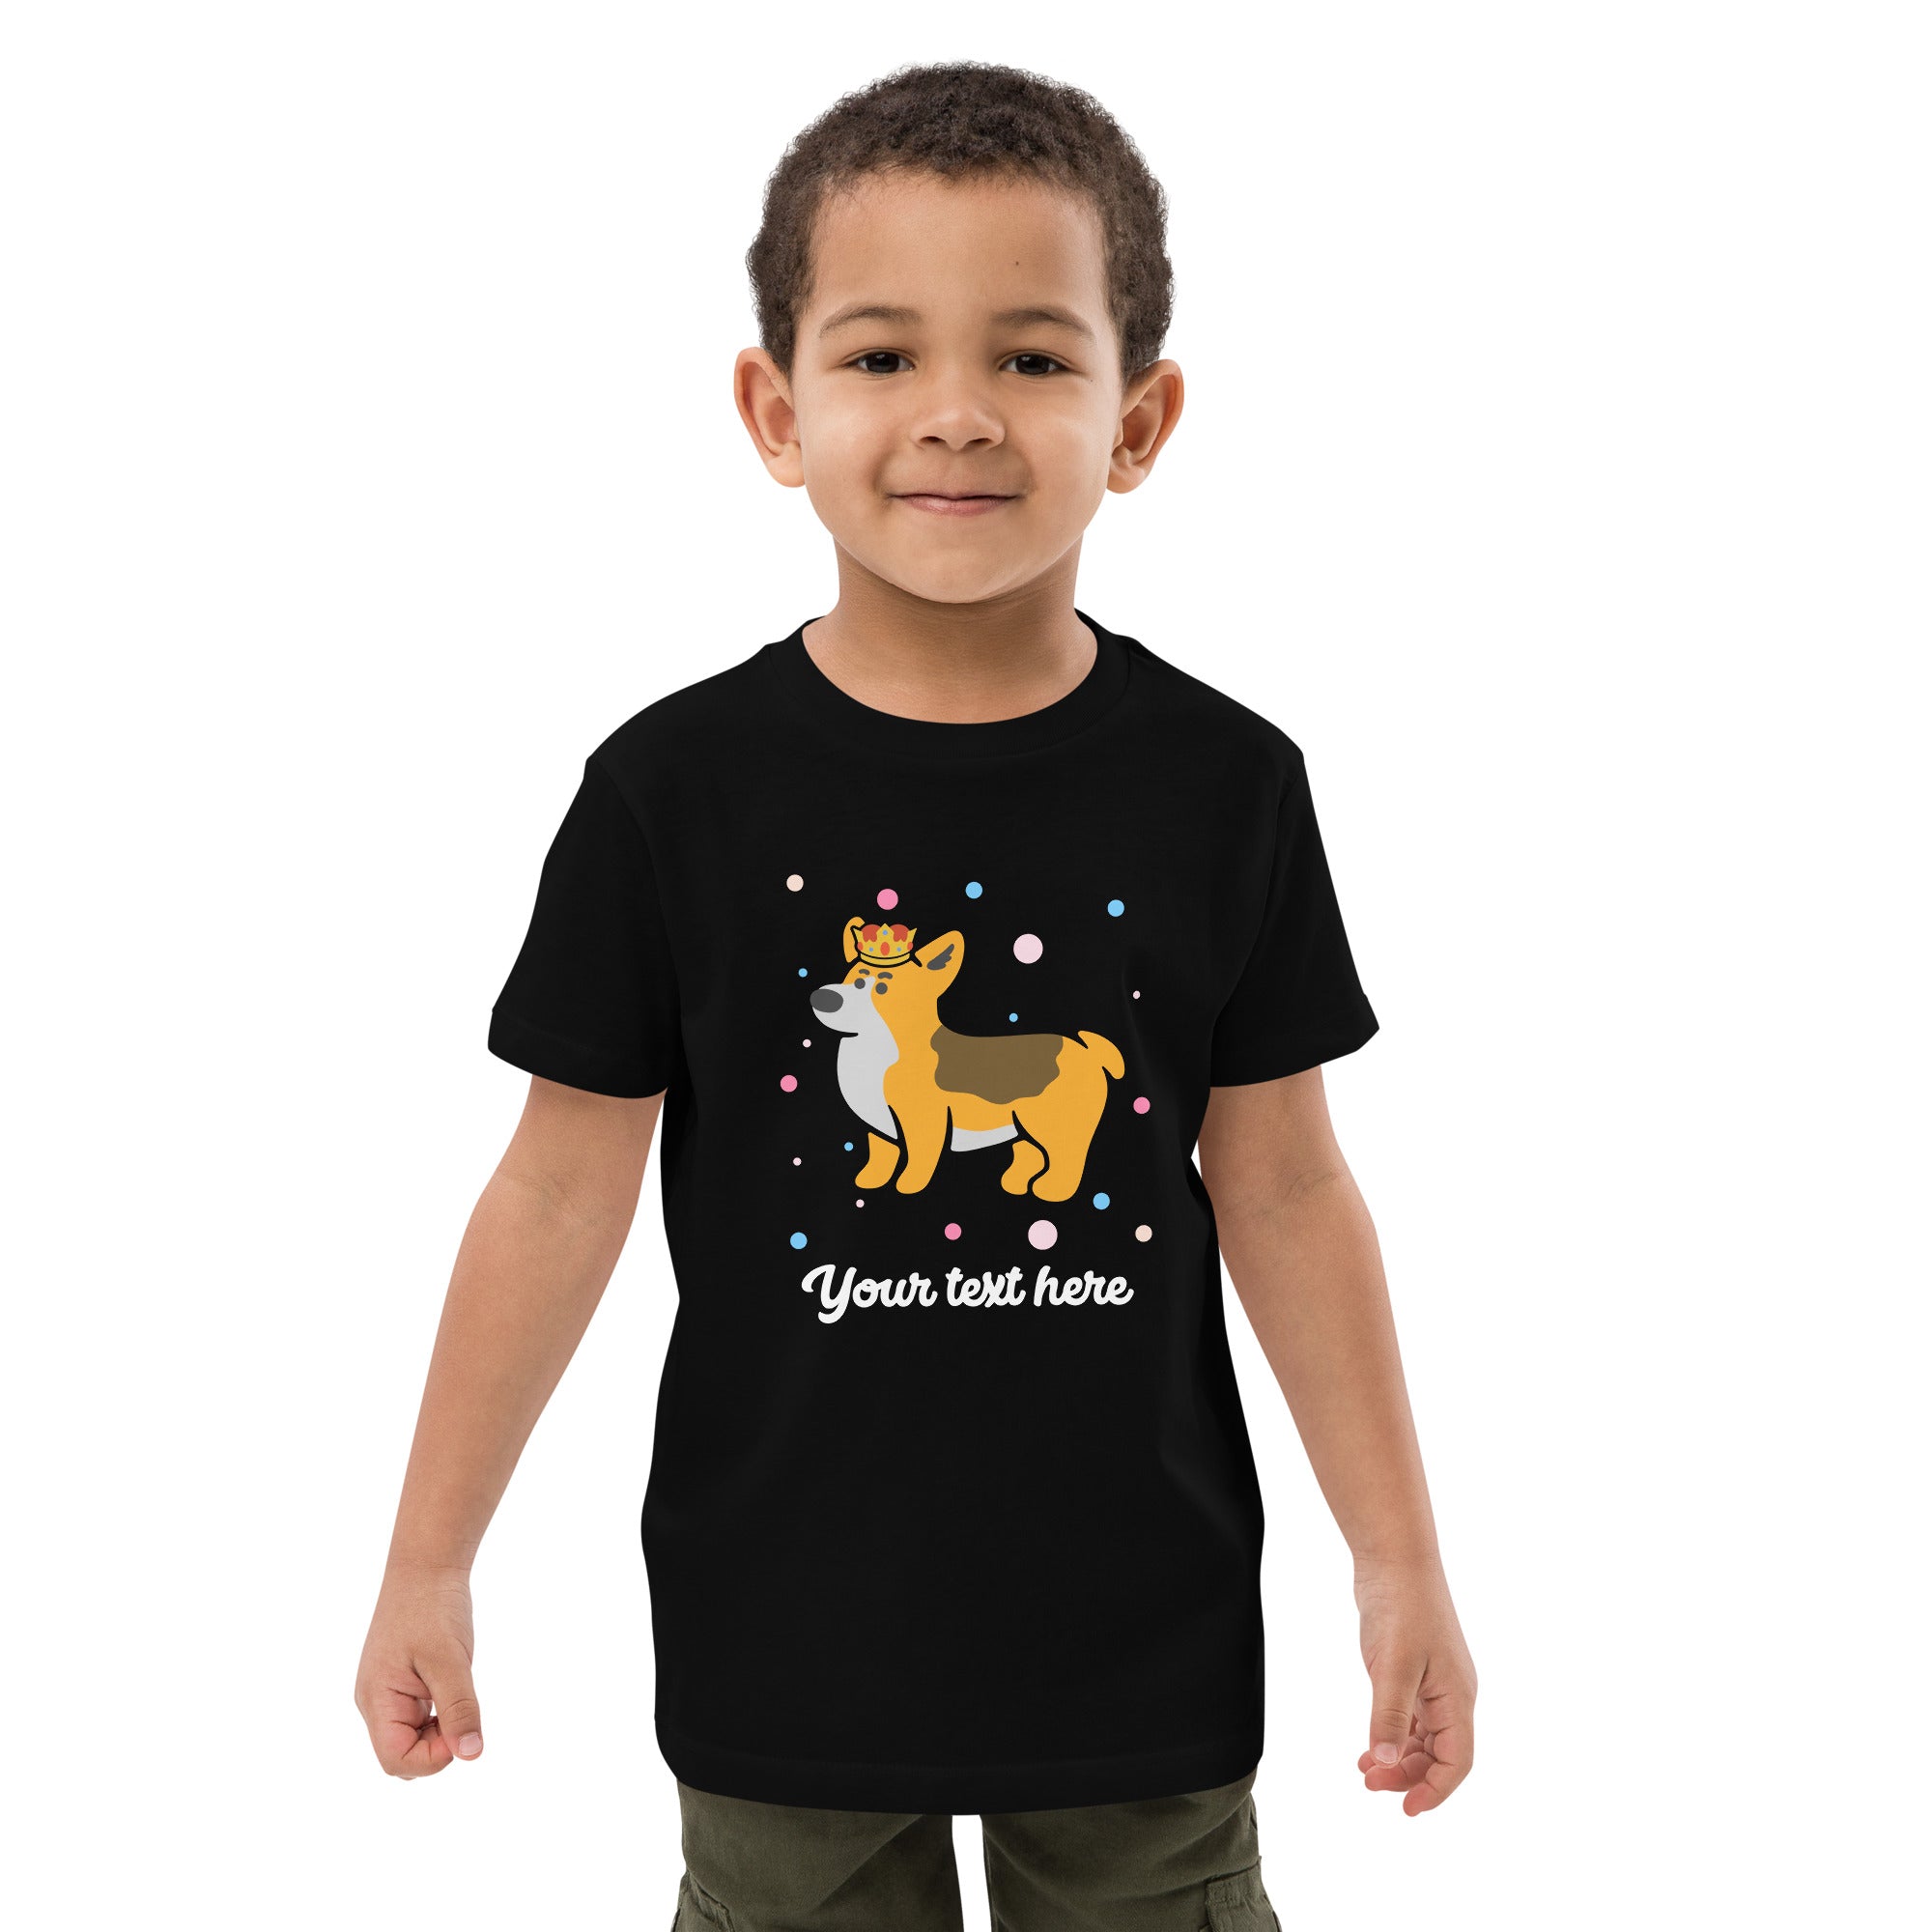 Personalised Custom Text - Organic Cotton Kids T-Shirt - London Doodles - Royal Corgi - Black 2